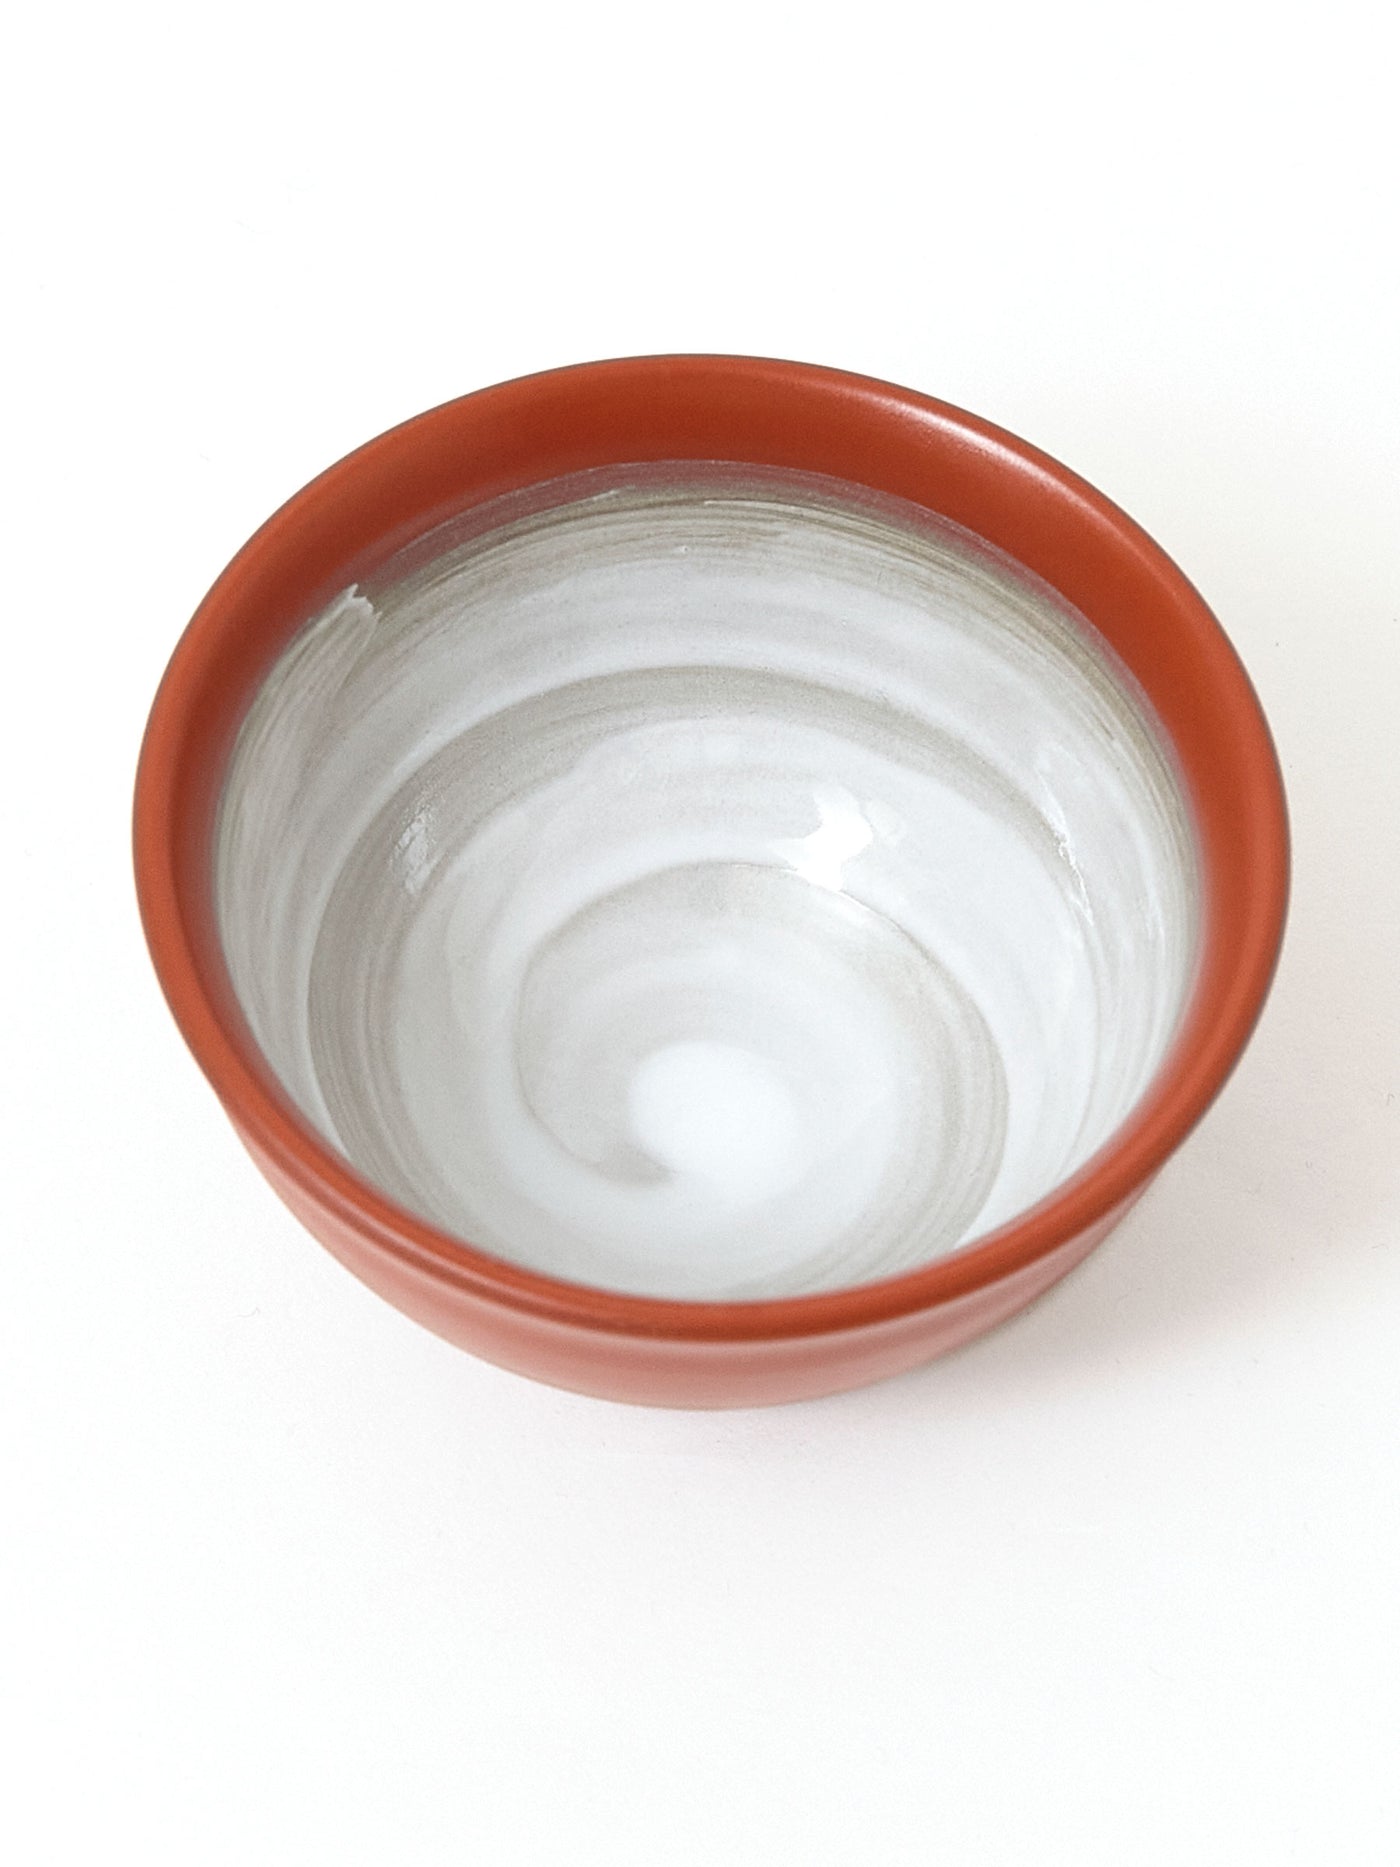 Red Clay Tokoname Japanese Teacup Set by Ukou (3½ fl.oz/100ml)